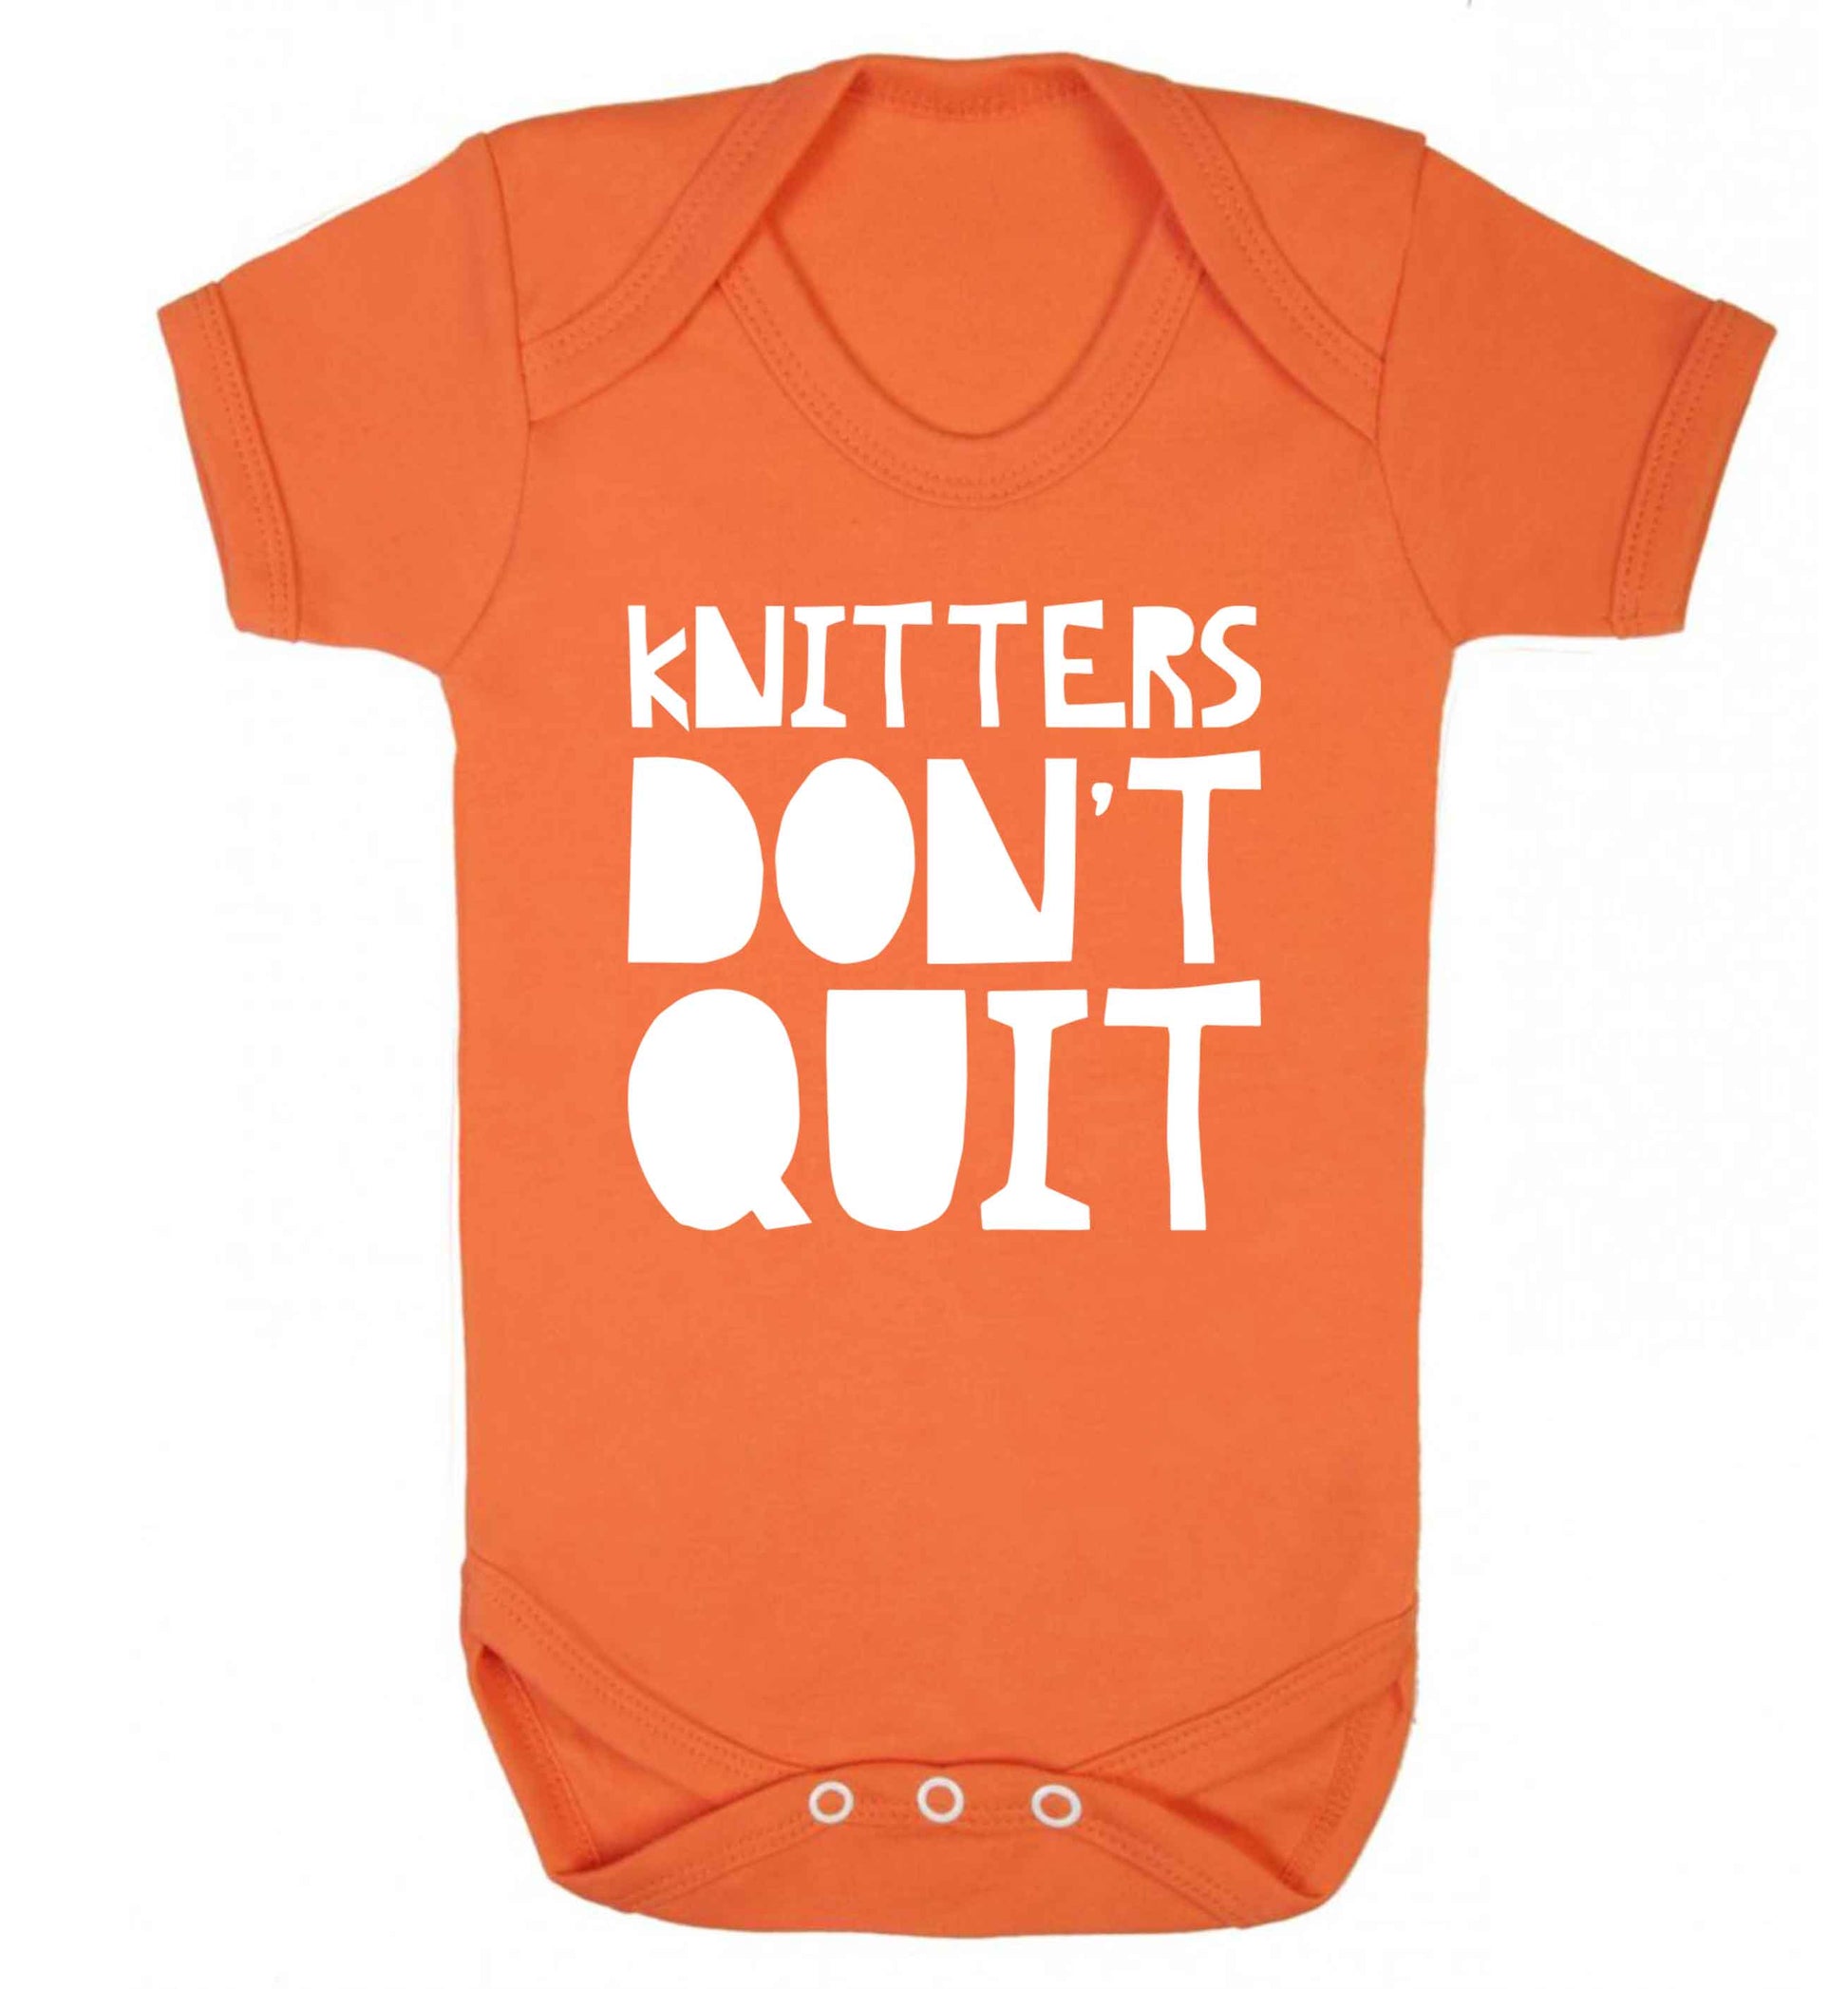 Knitters don't quit Baby Vest orange 18-24 months